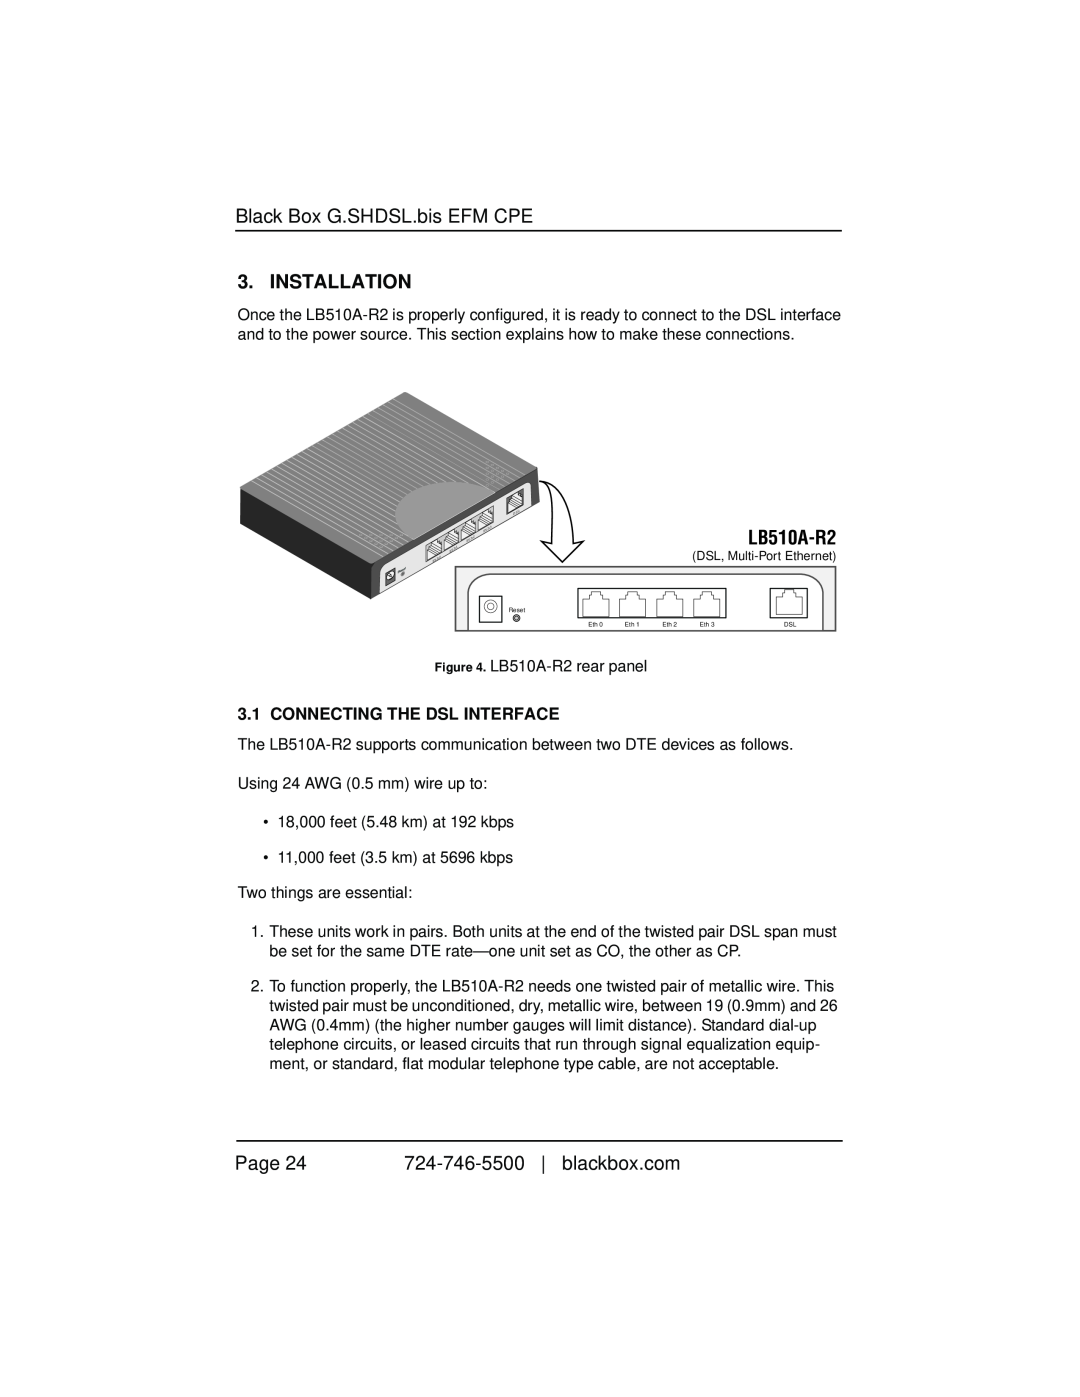 Black Box LB510A-R2 manual Installation, Connecting The Dsl Interface, Black Box G.SHDSL.bis EFM CPE, Page, blackbox.com 